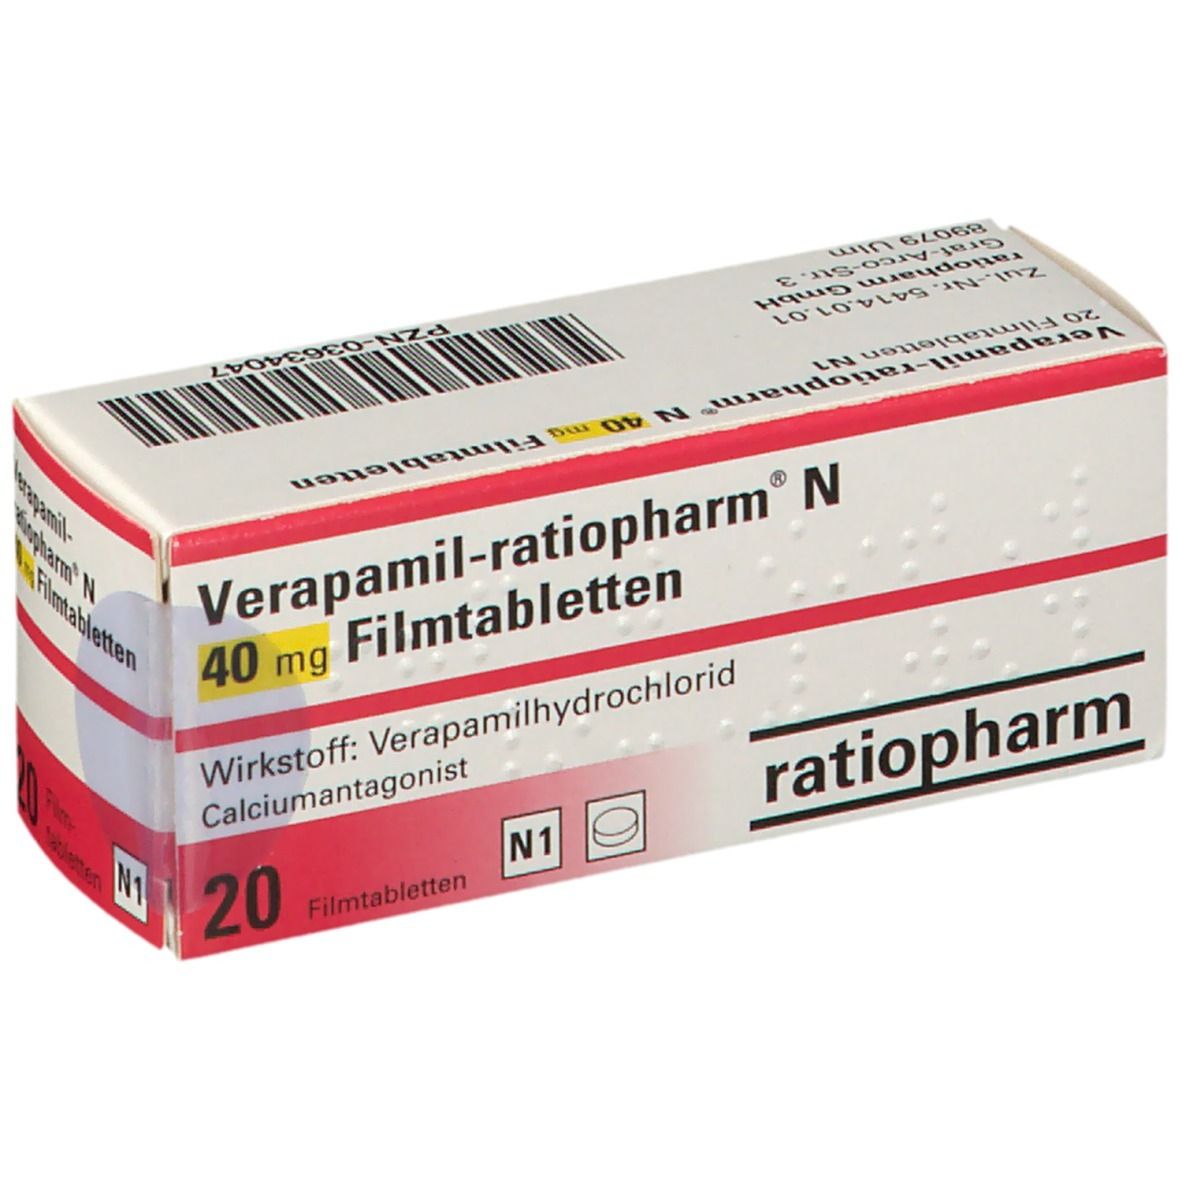 Verapamil-ratiopharm® N 40 mg